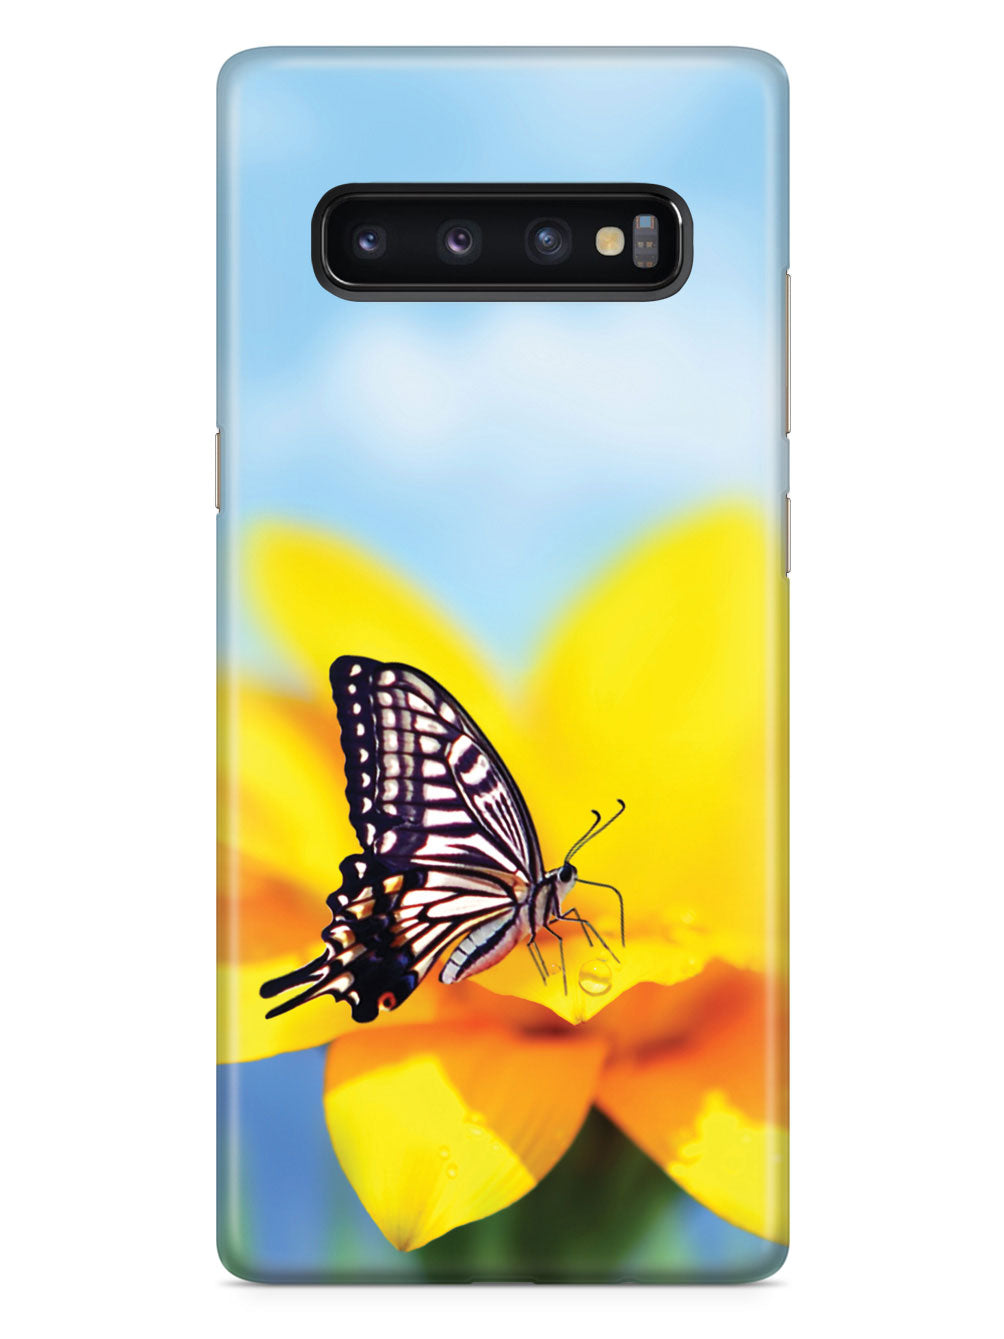 Monarch Butterfly on Yellow Flower - Black Case